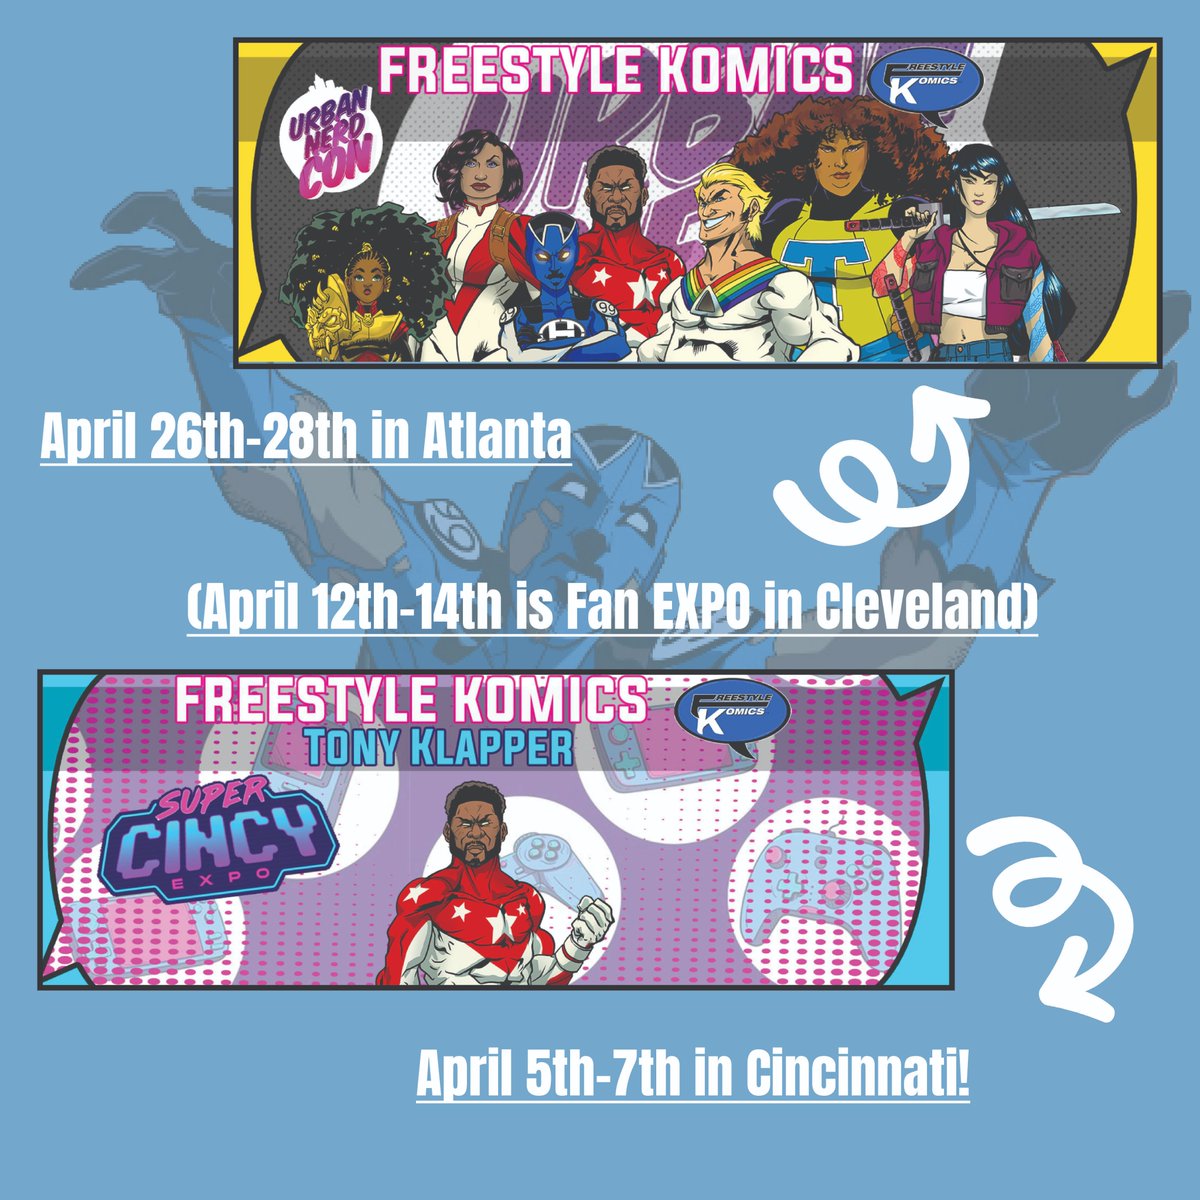 Check out these upcoming events in April! Tony Klapper in Cincinnati 5th-7th FSK in Cleveland 12th-14th FSK in Atlanta 26th-28th #comic #igcomics #comicon #comiccollector #comicsforsale #comicbookartist #comico #comicbooknerd #comicnerd #fyp #cons #comiccon